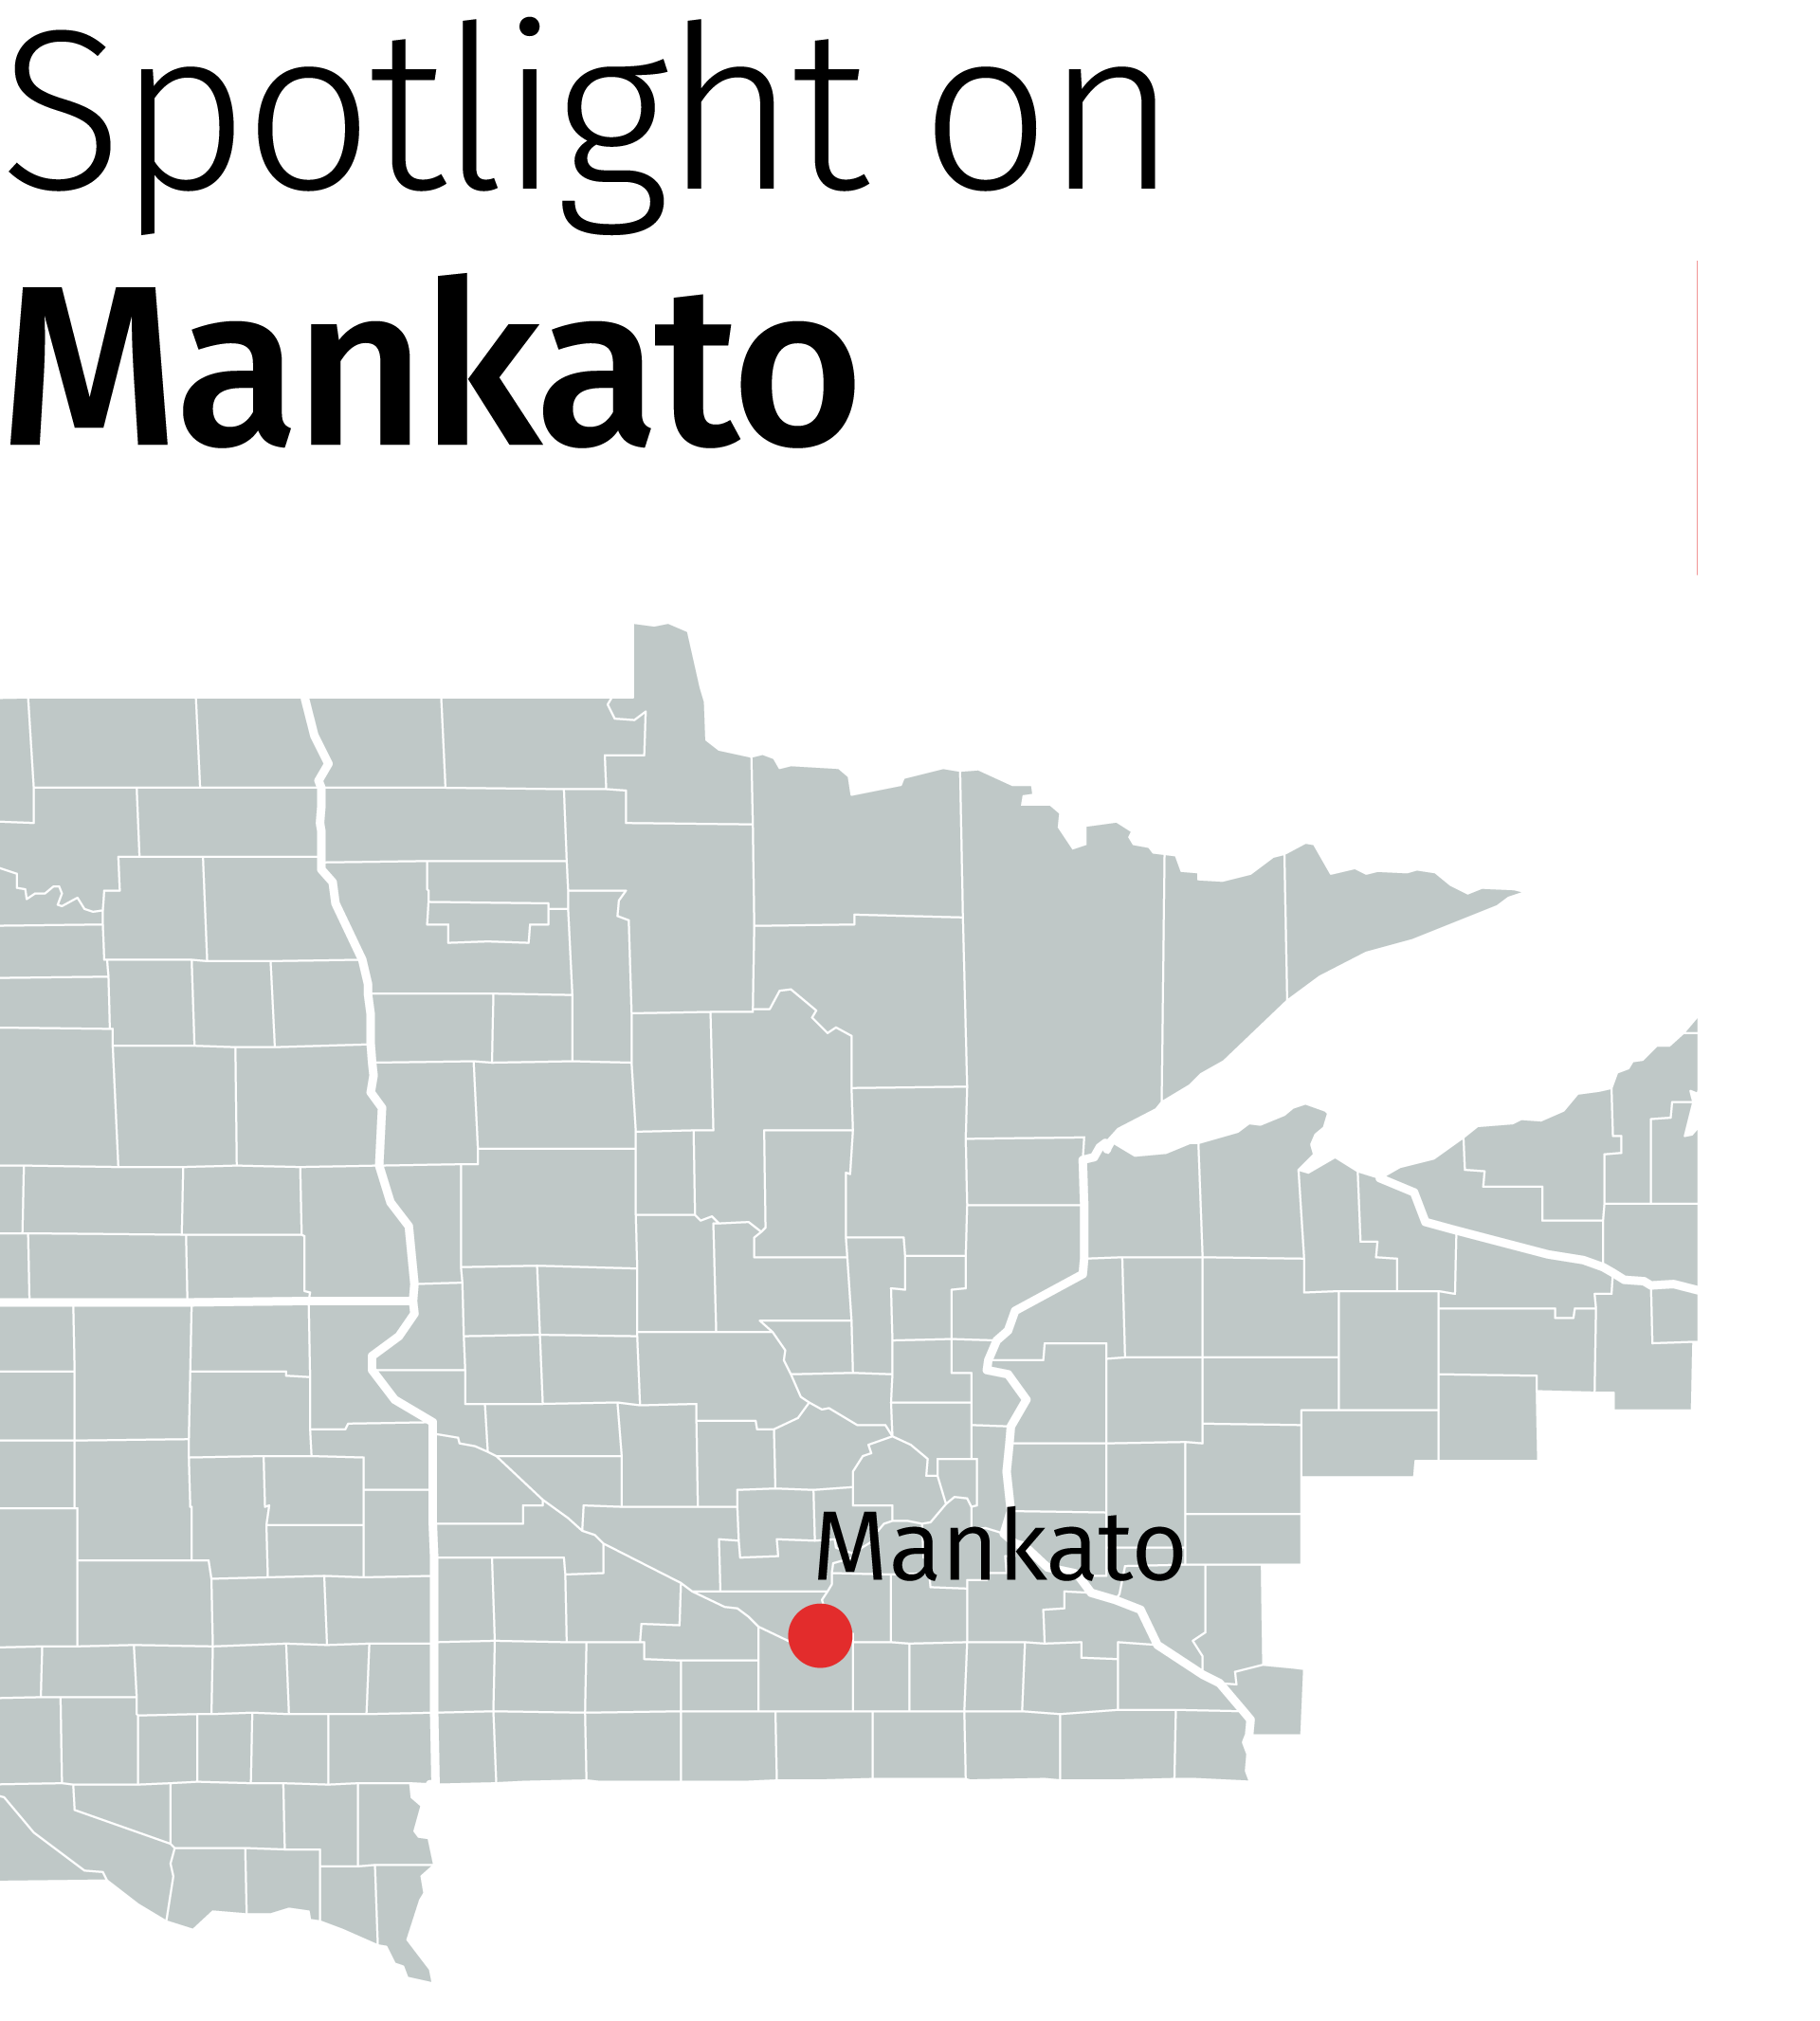 District spotlight on Mankato